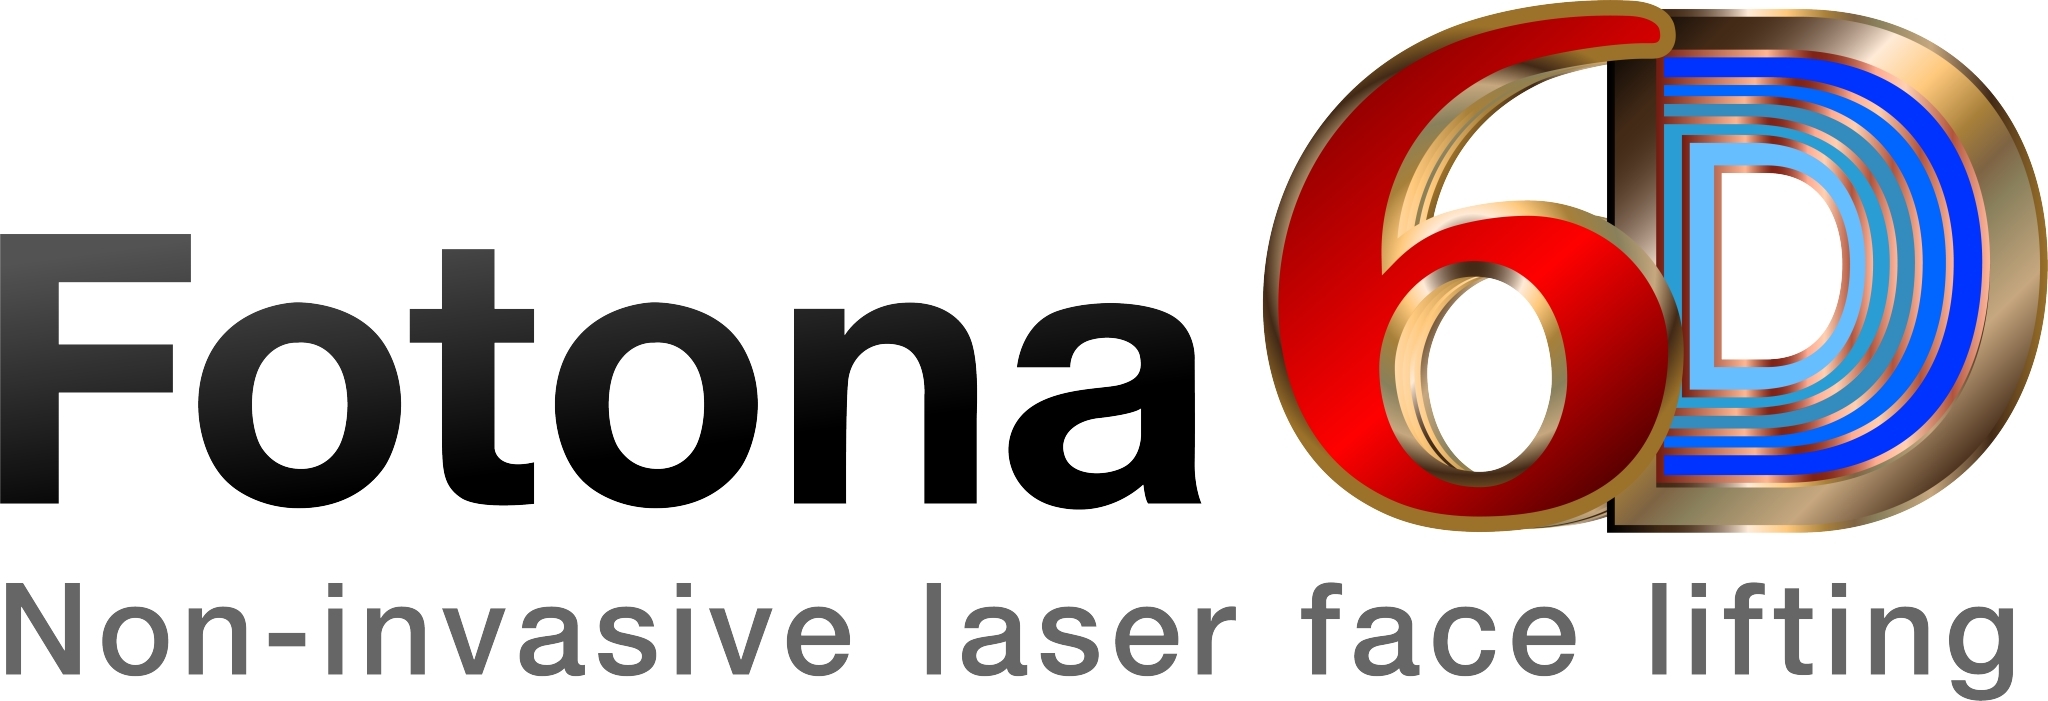 fotona 6d logo